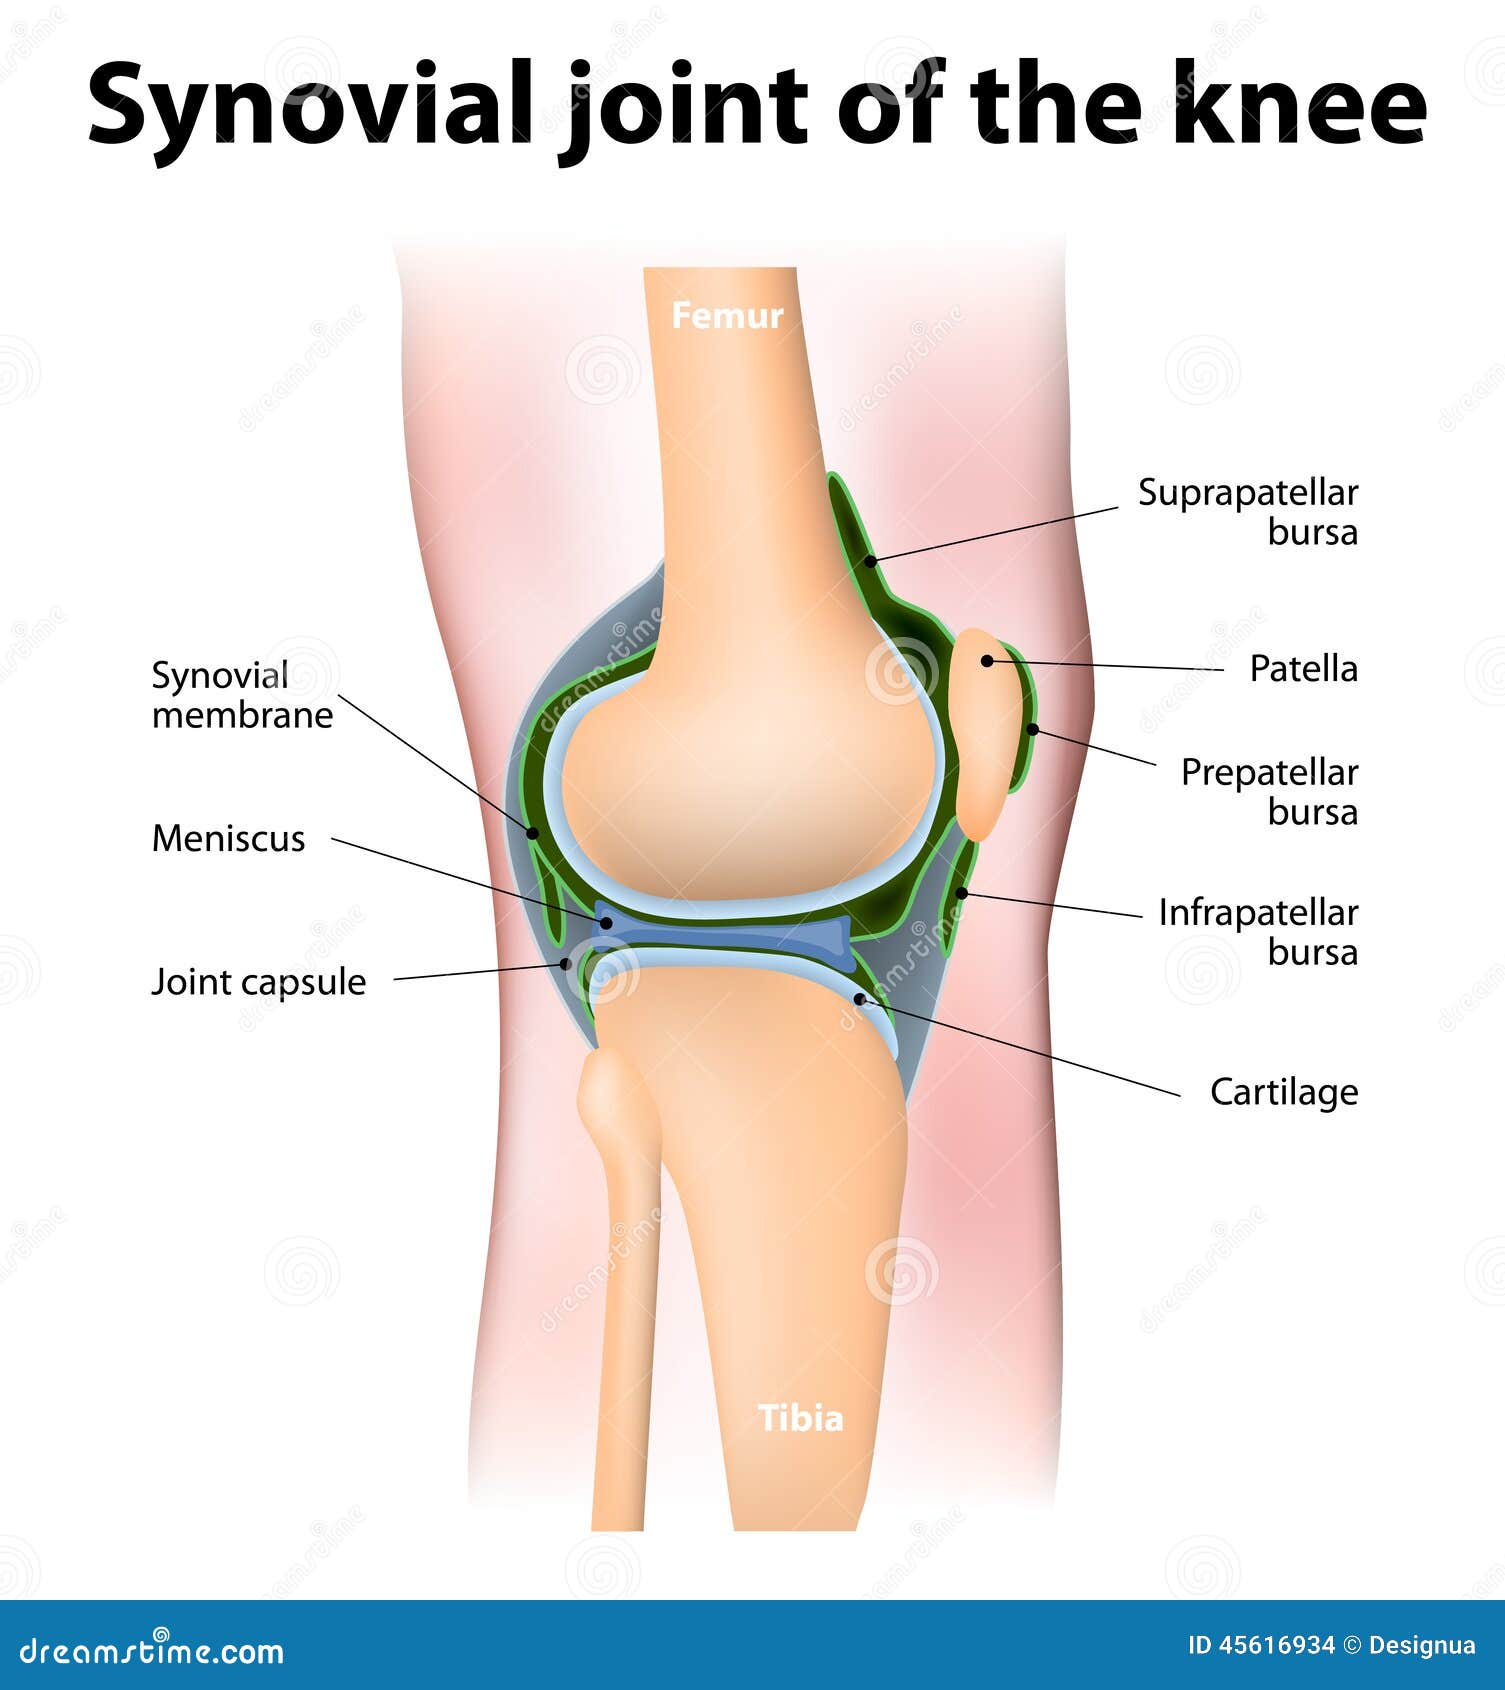 synovial bursa of the human knee